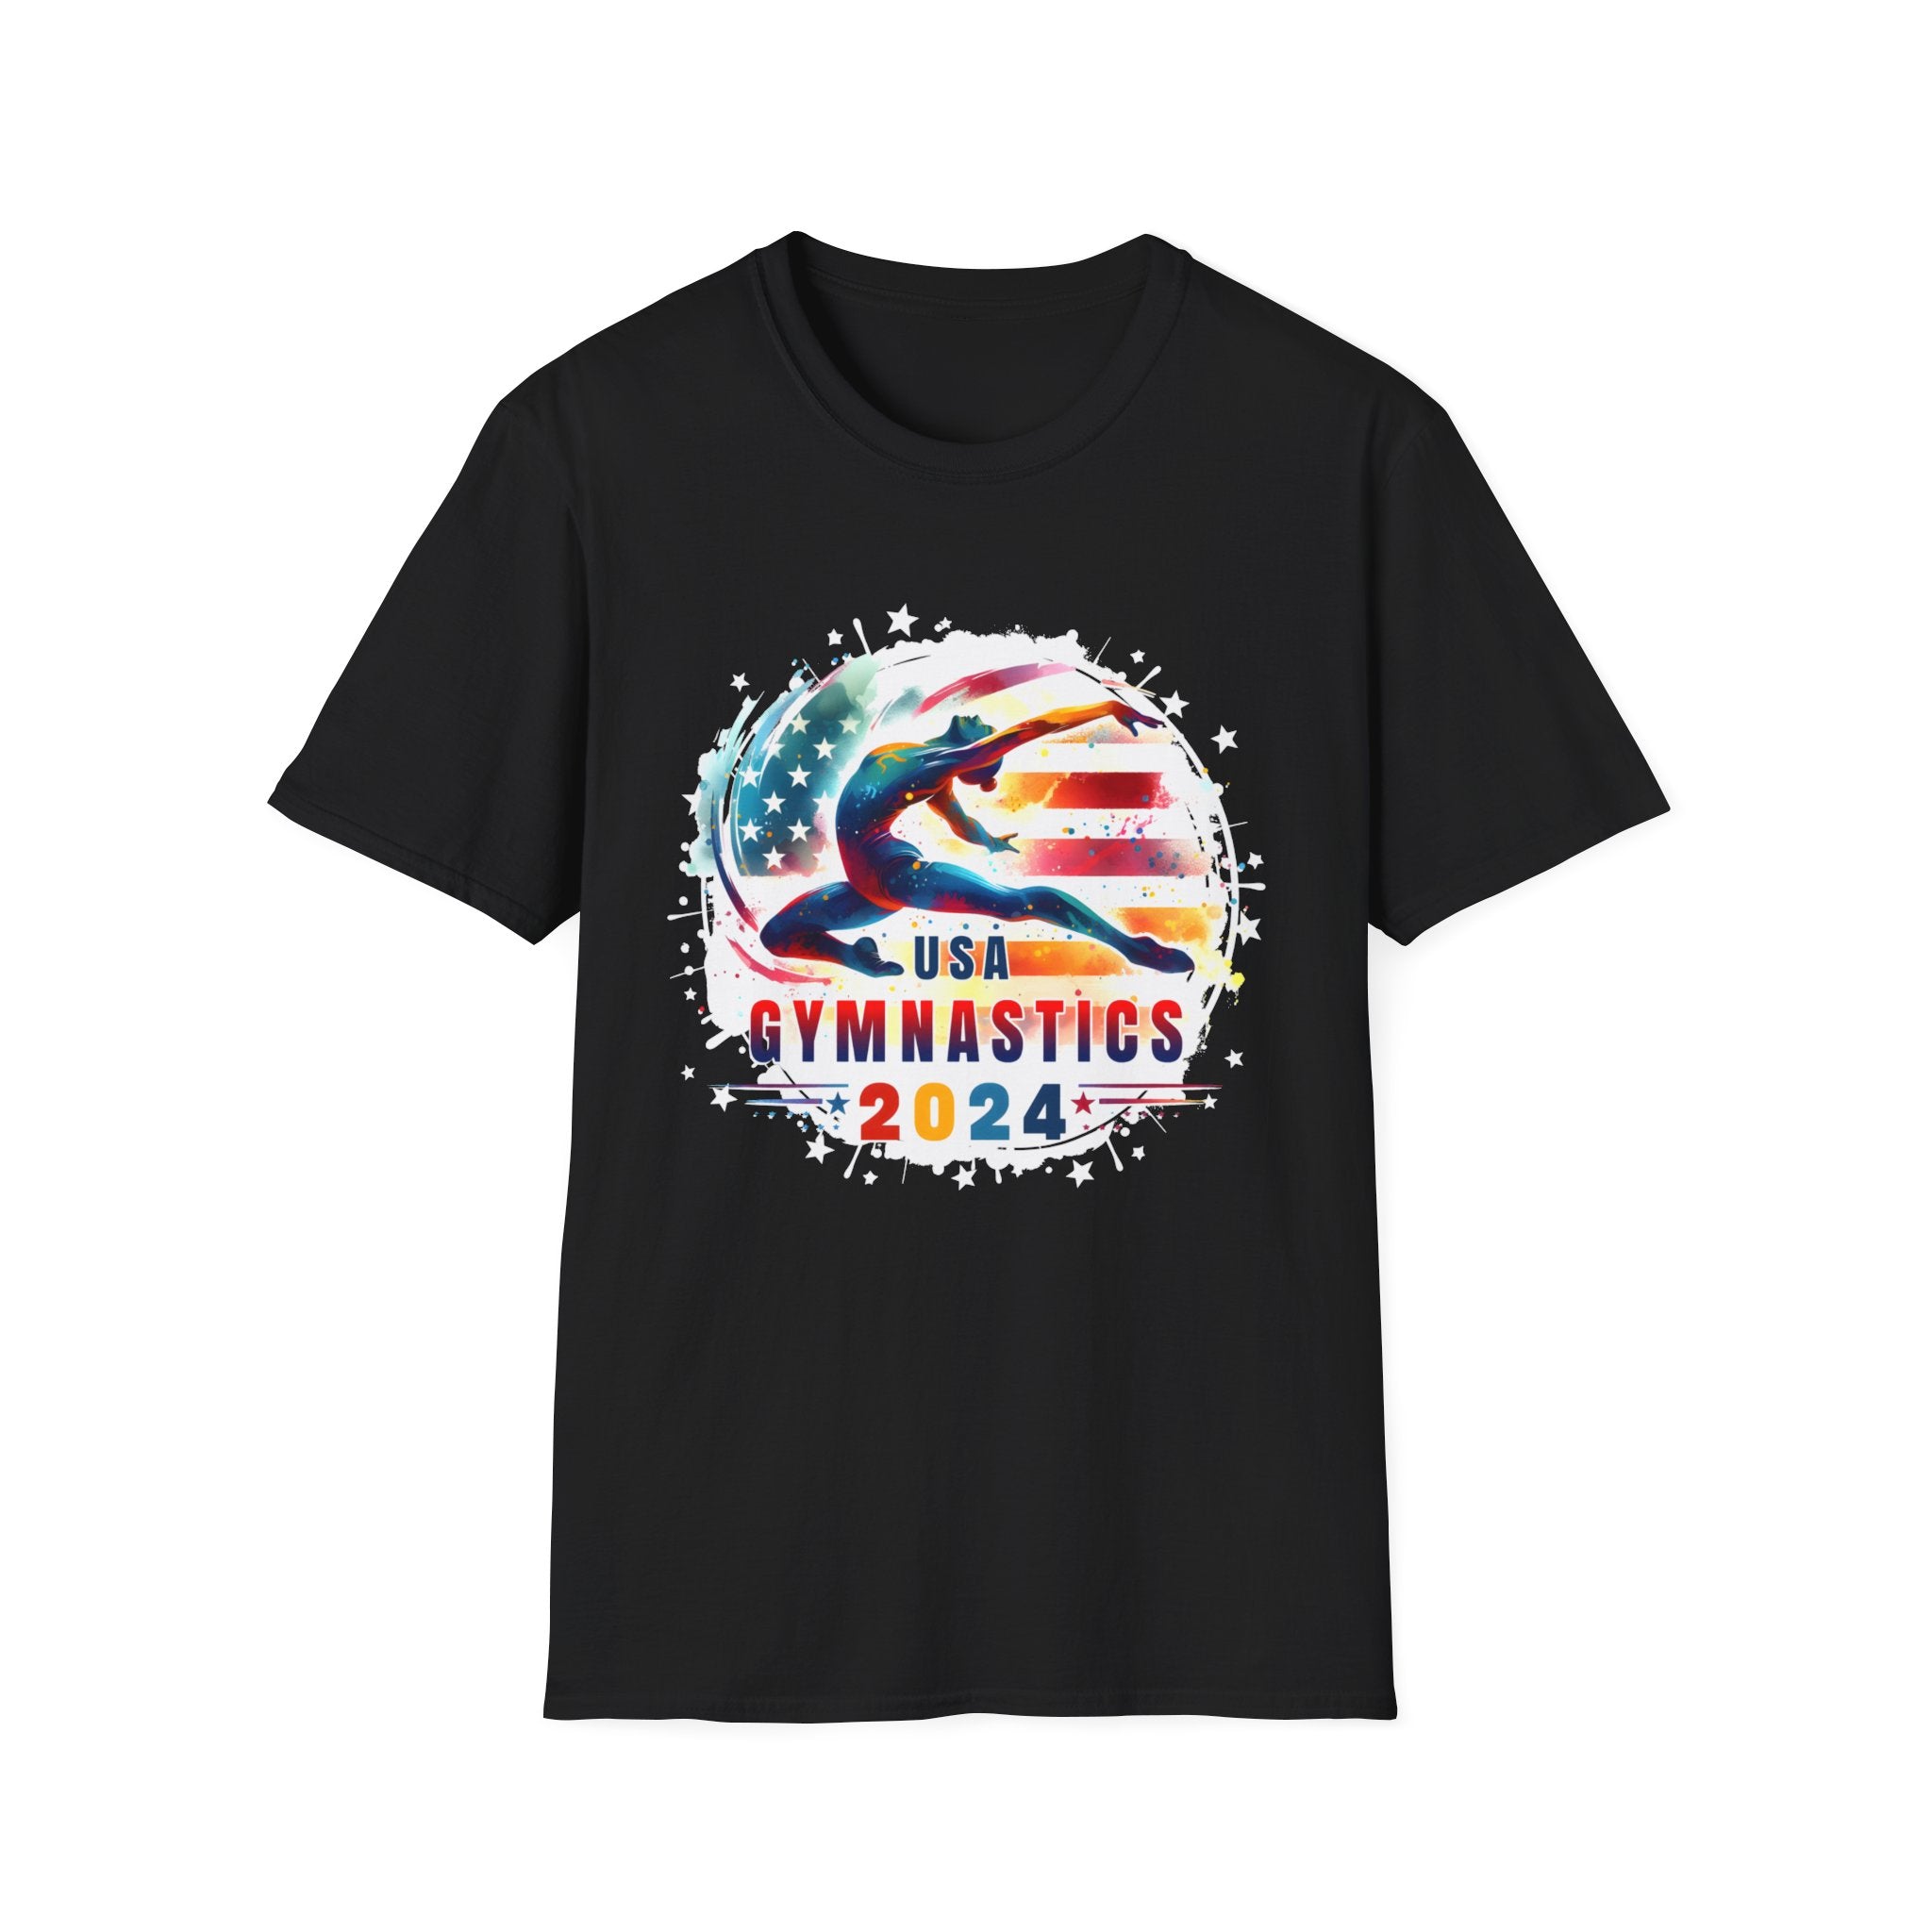 USA 2024 Games United States Gymnastics America 2024 USA Shirts for Men